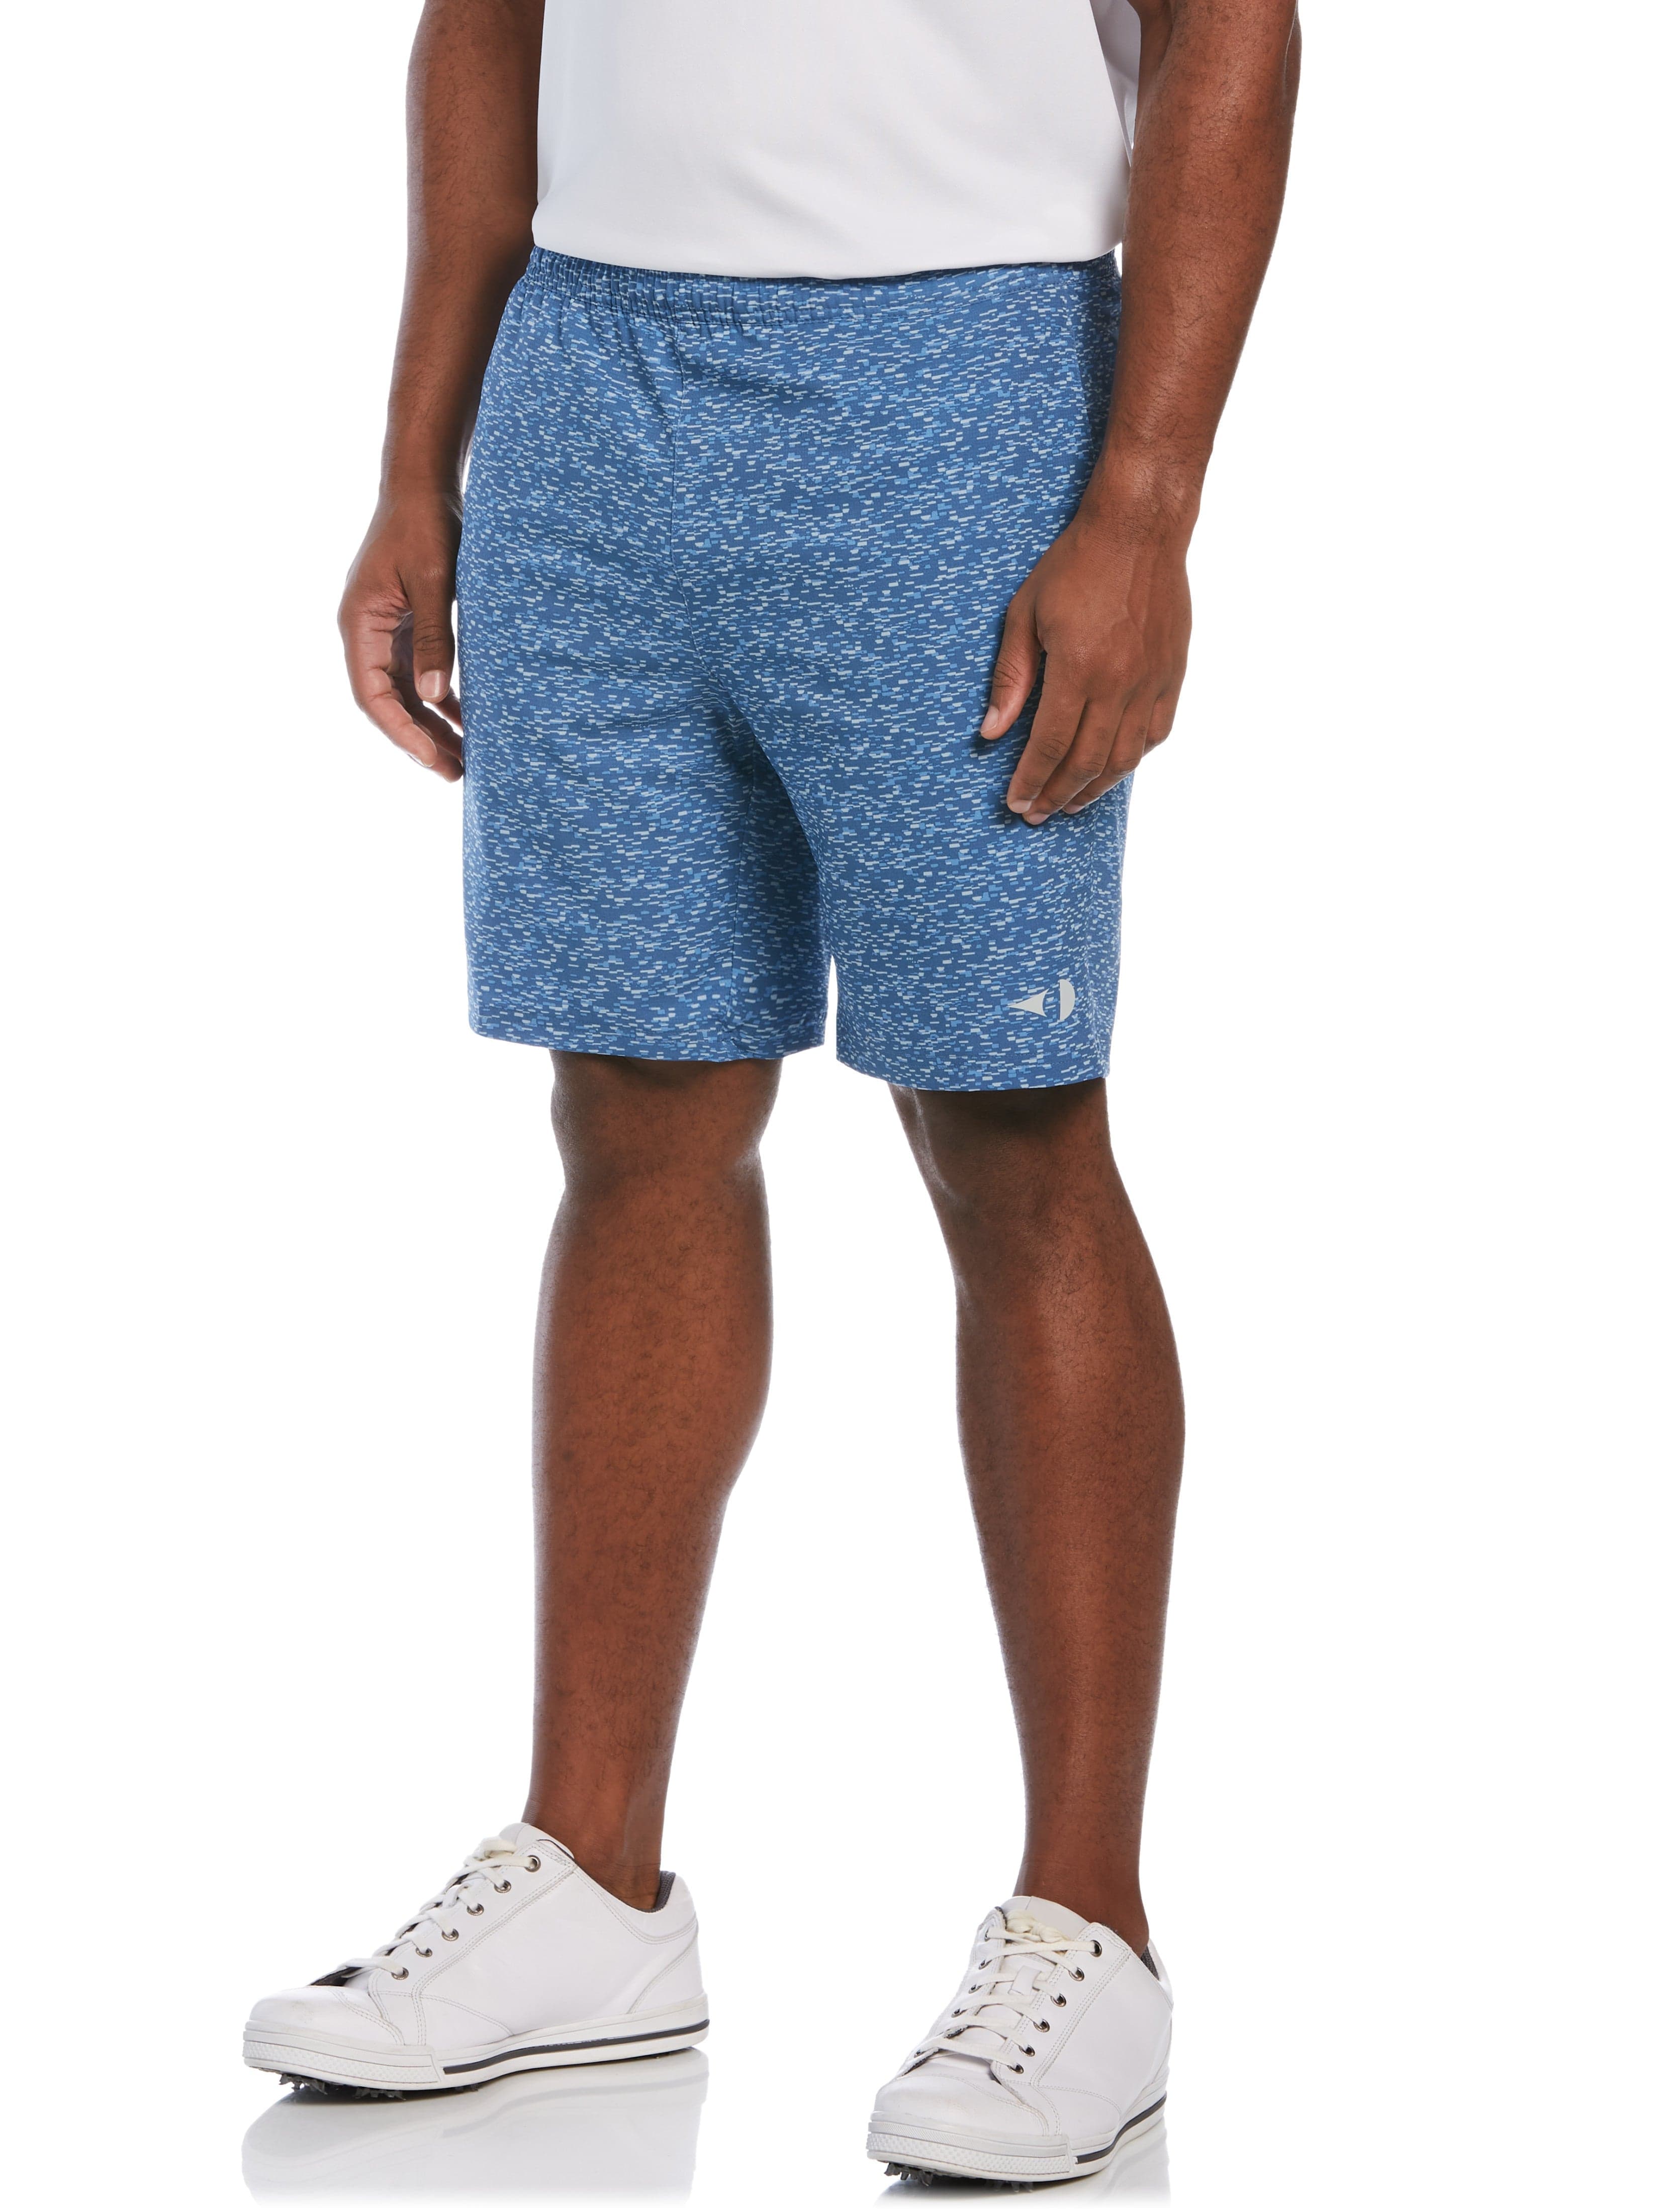 Grand Slam Mens Athletic Printed Tennis Short, Size Large, Blue Horizon, Polyester/Elastane | Golf Apparel Shop